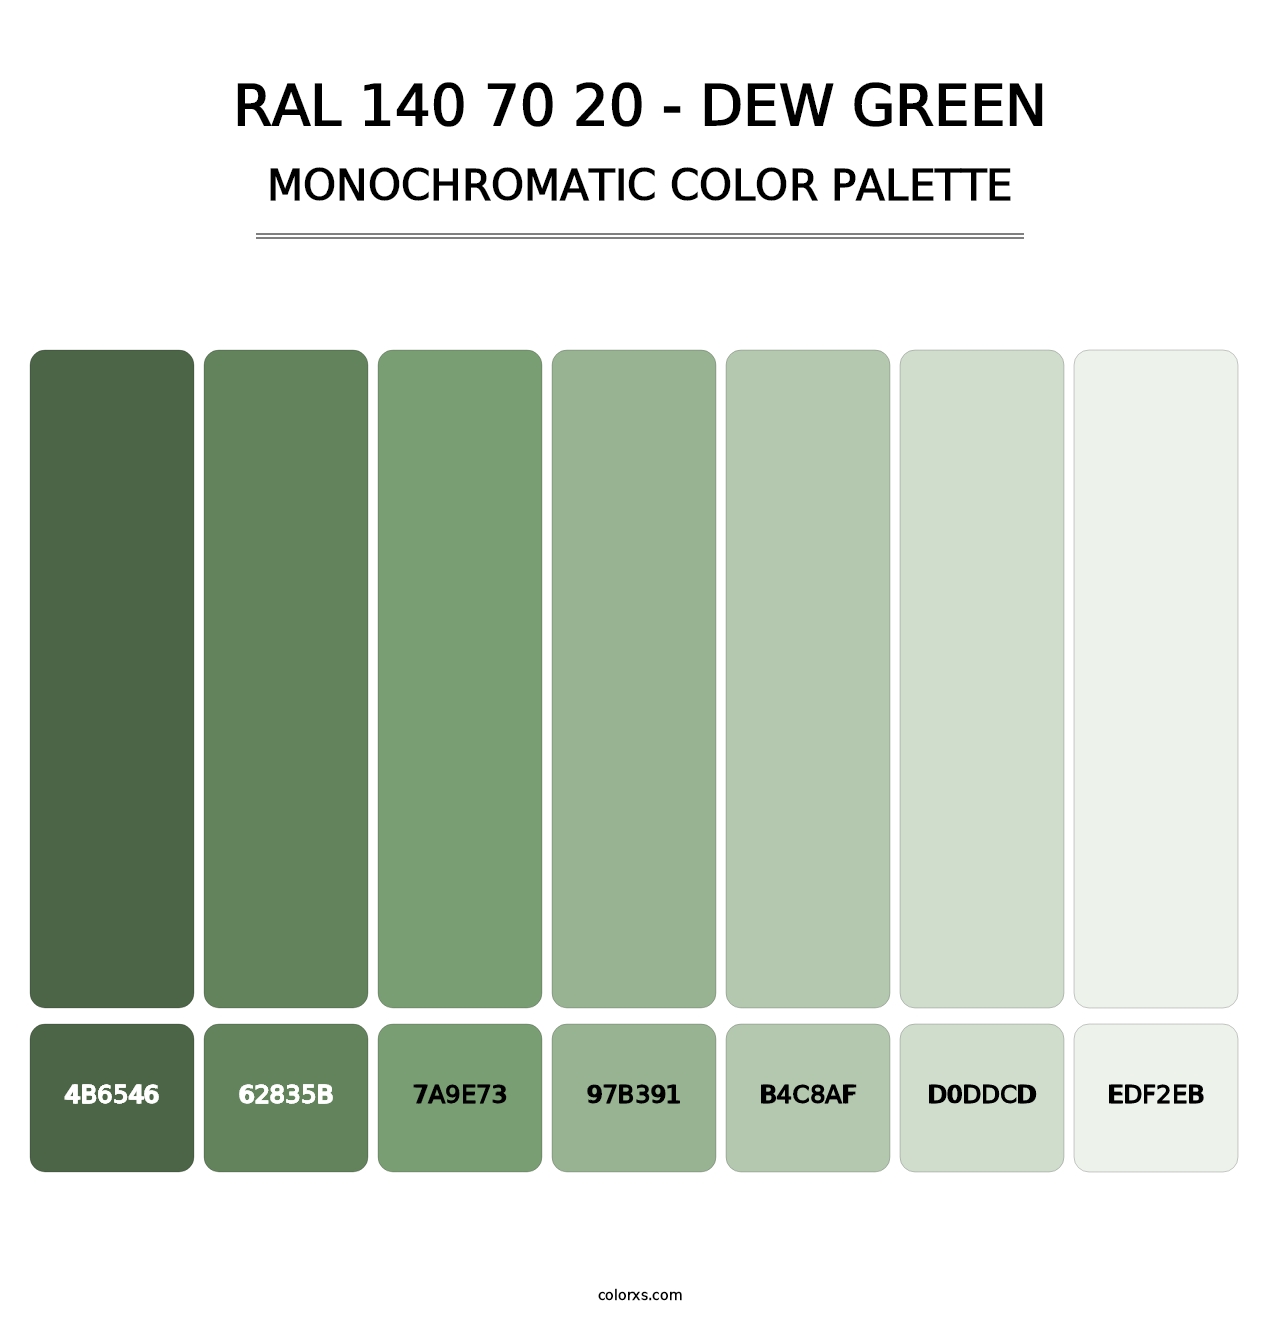 RAL 140 70 20 - Dew Green - Monochromatic Color Palette